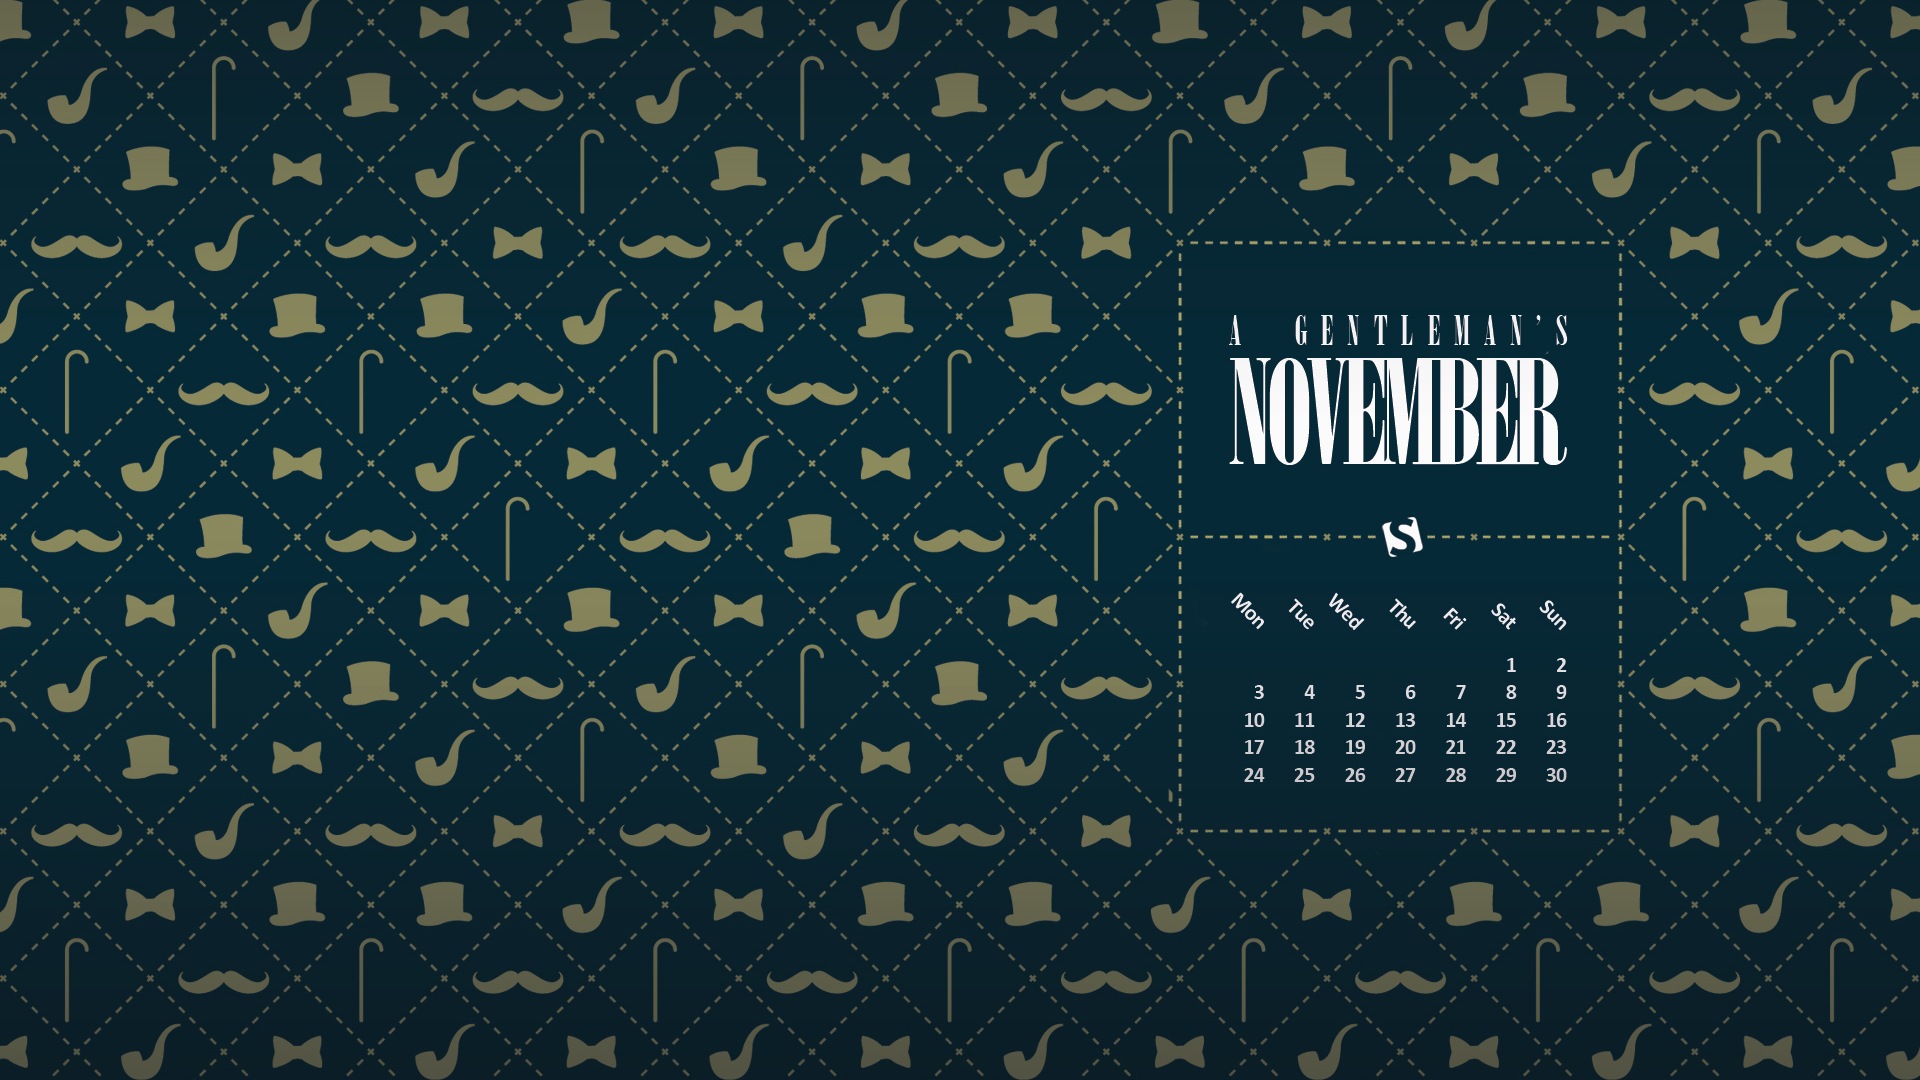 November 2014 Calendar wallpaper(2) #5 - 1920x1080